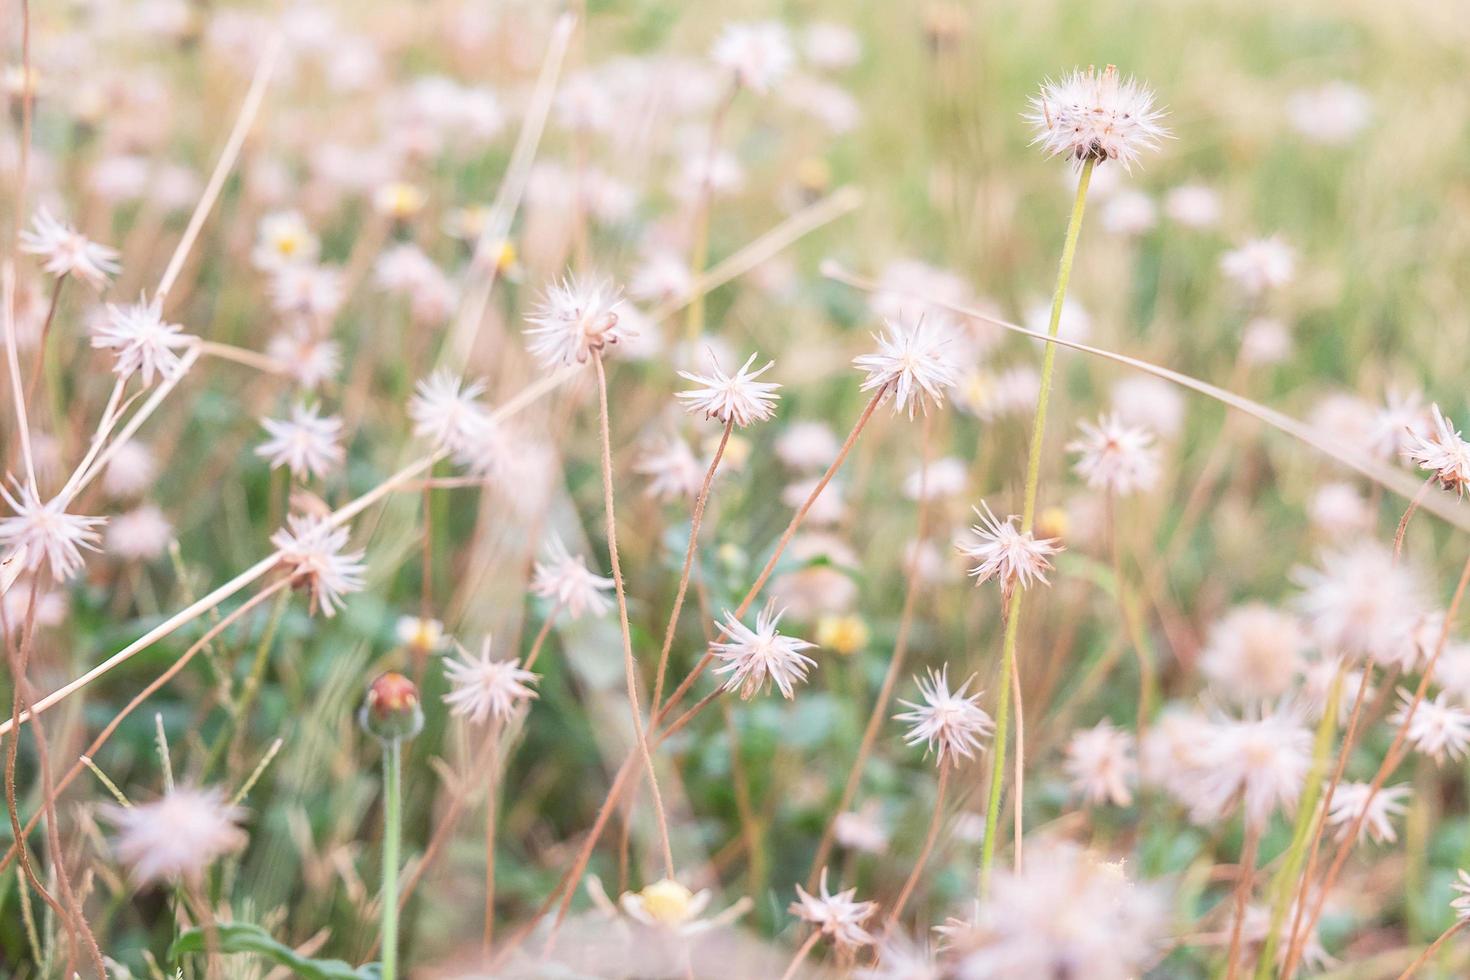 White dandelions in a field photo